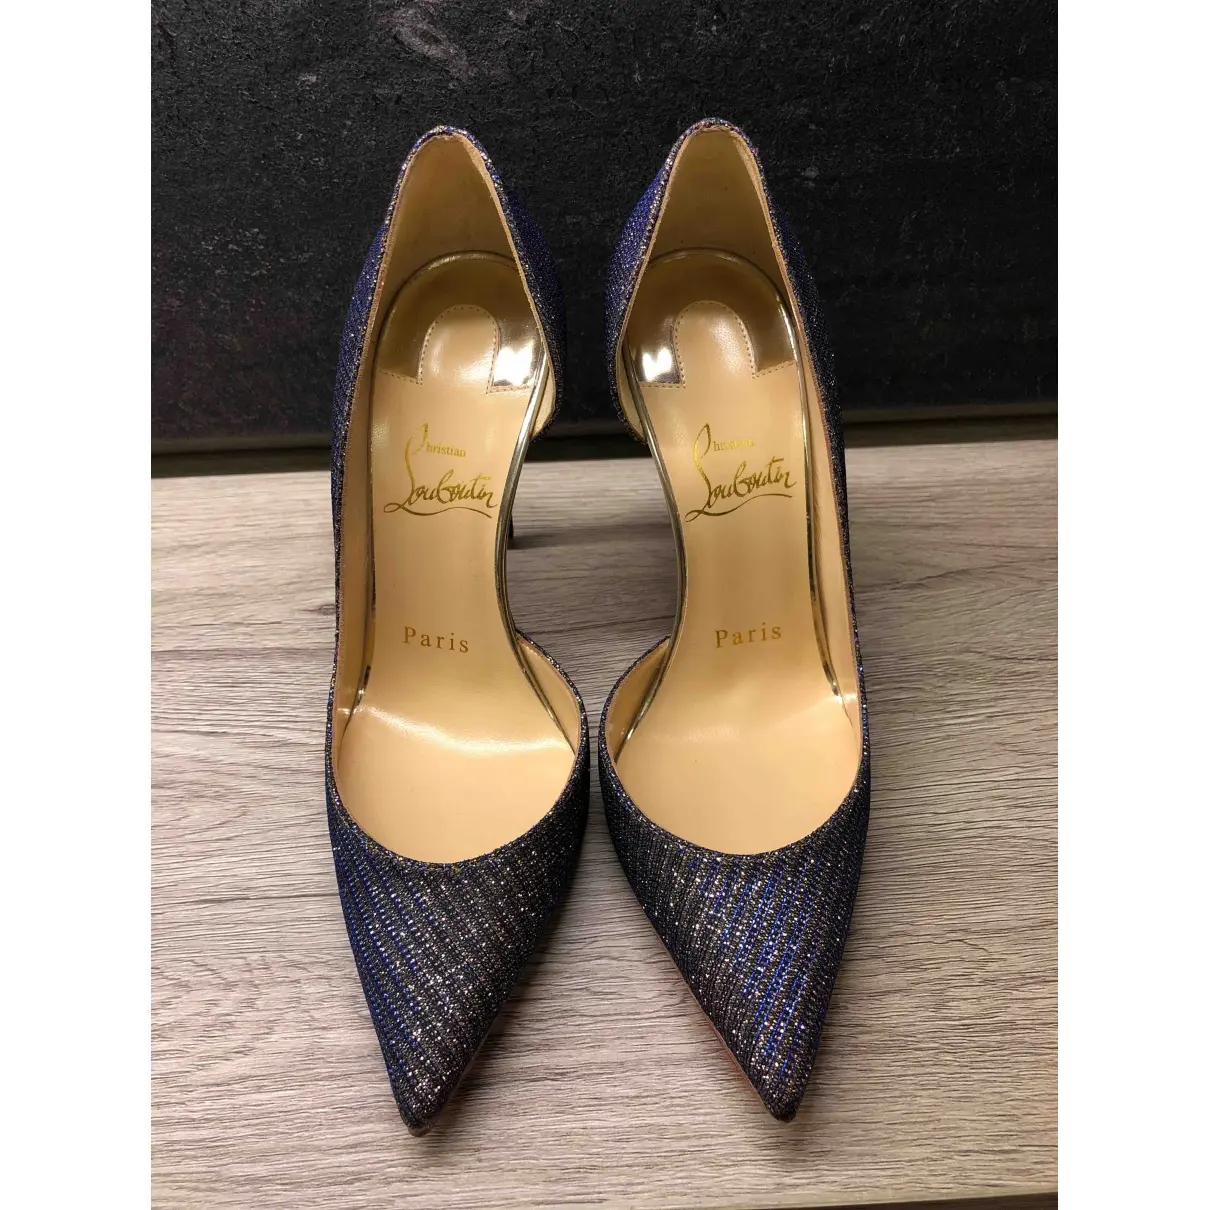 Buy Christian Louboutin Iriza glitter heels online